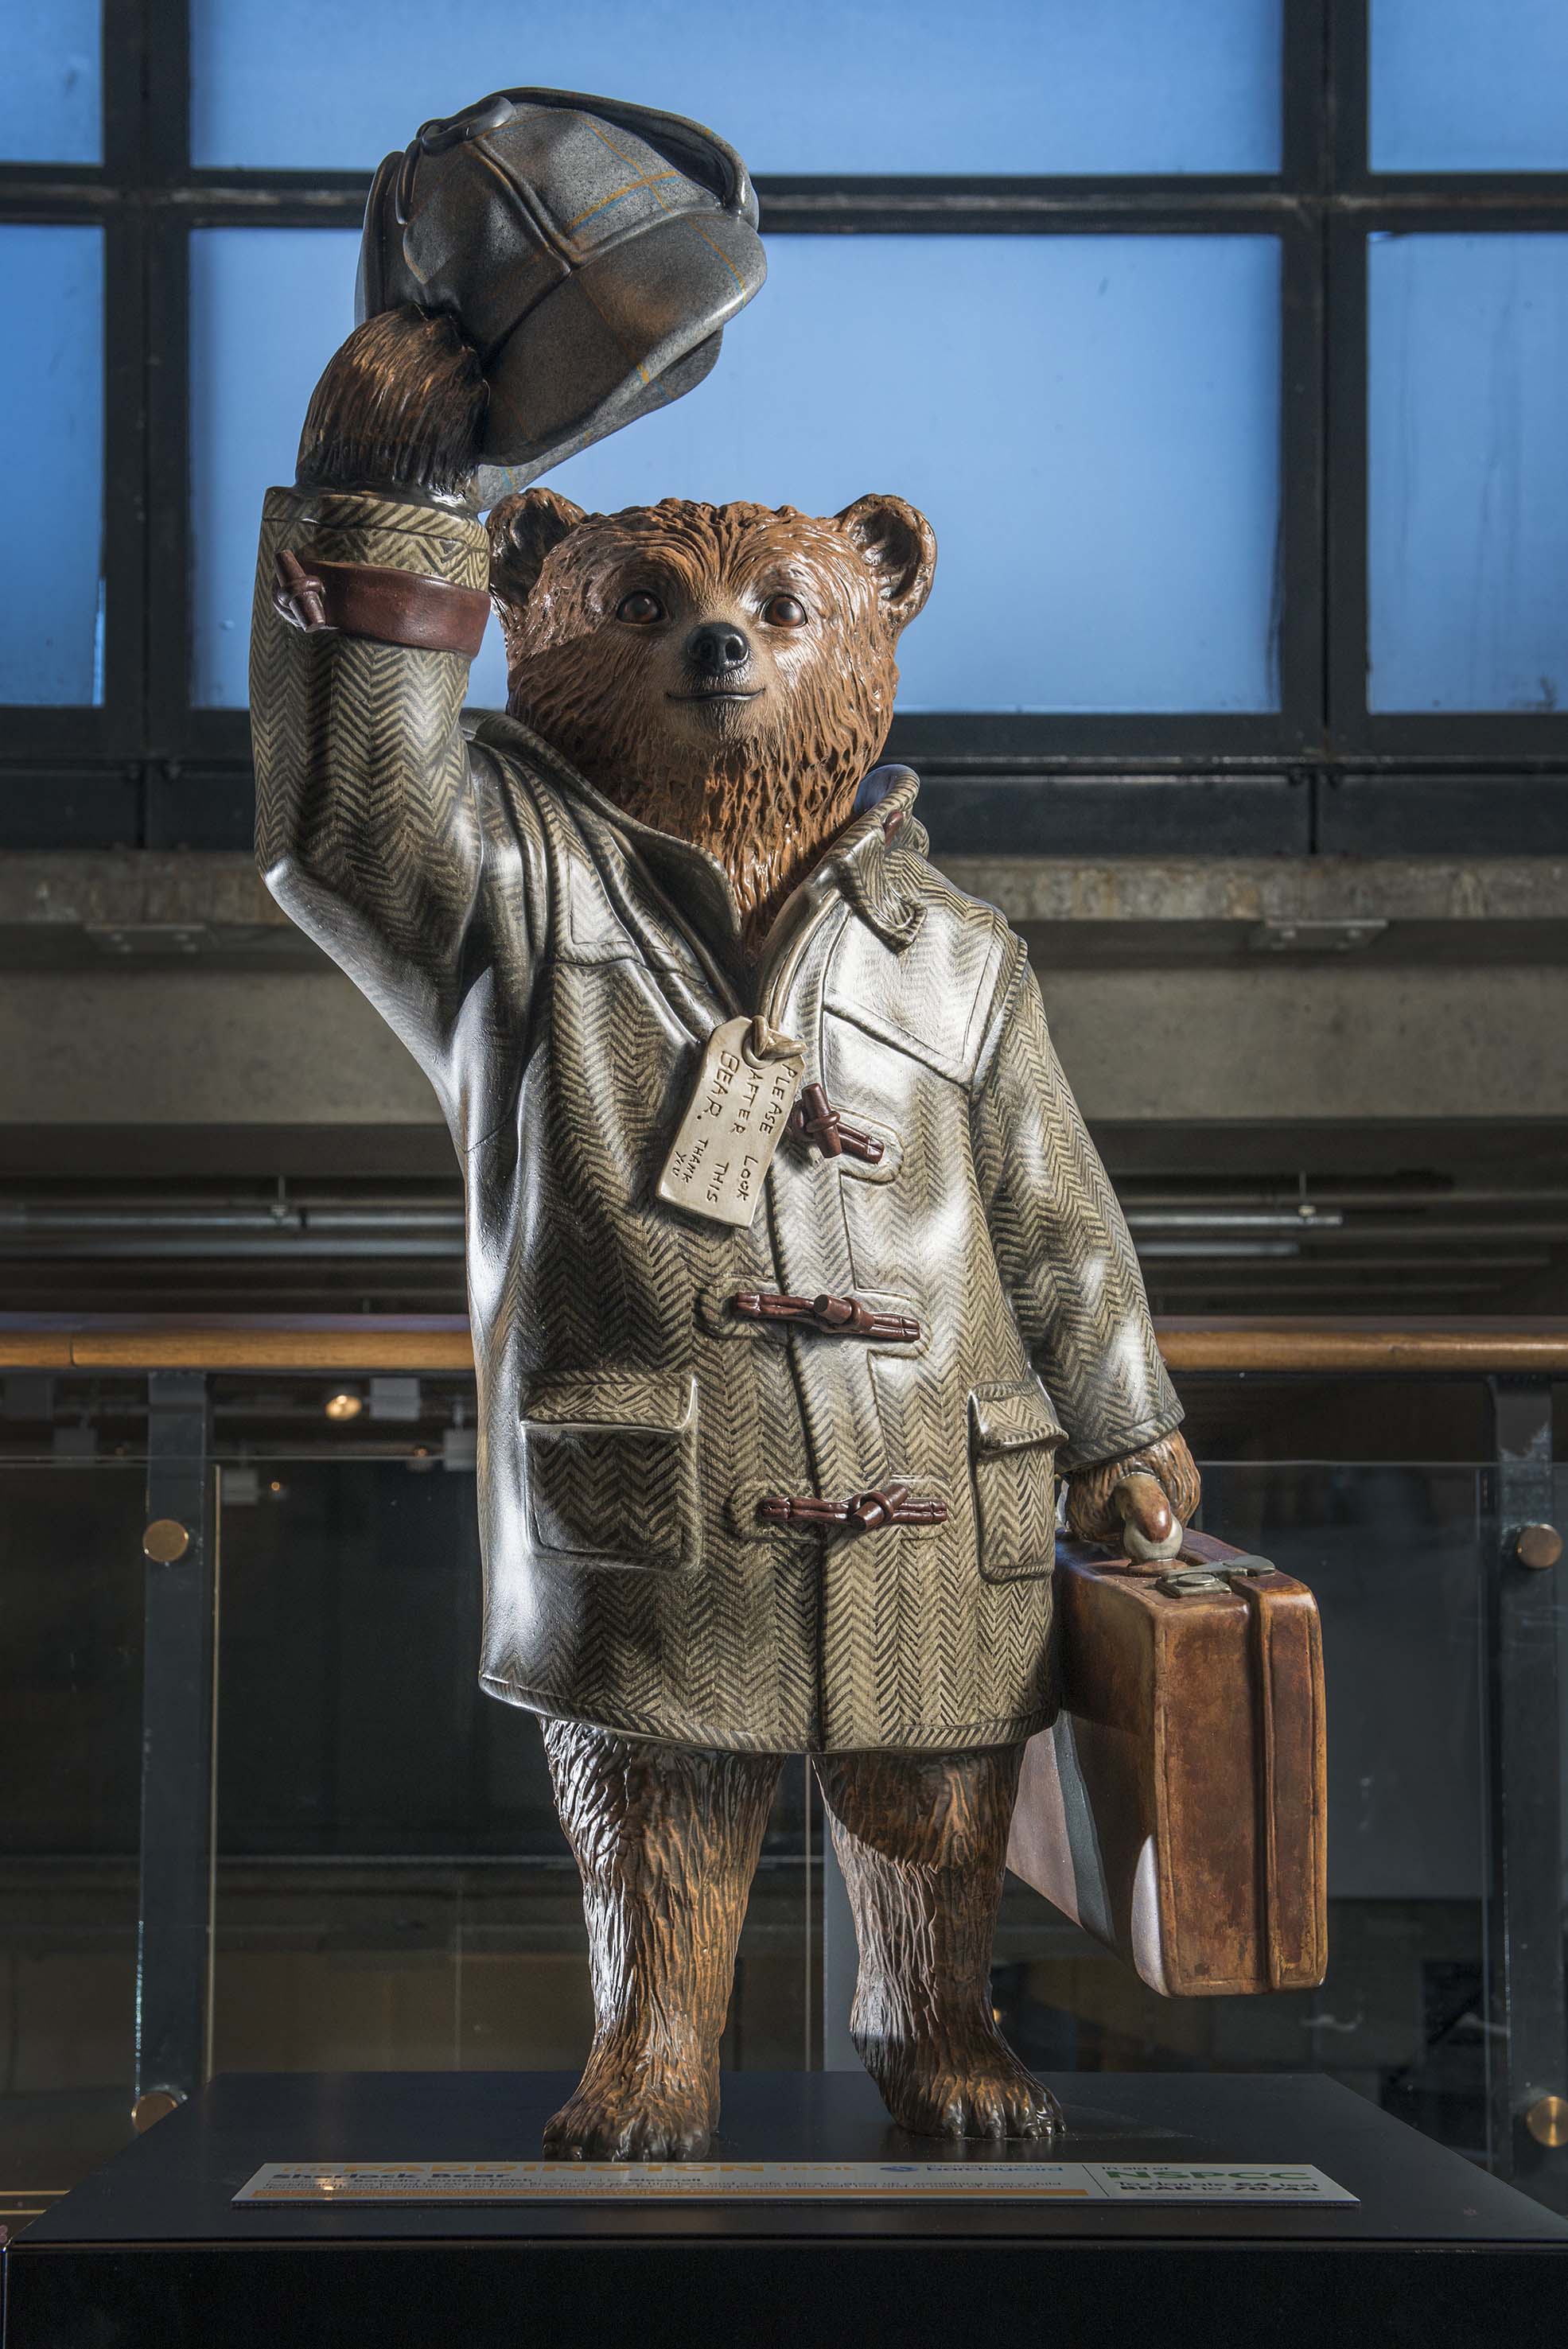 Benedict Cumberbatch’s Paddington Trail bear at the Museum of Museum. 